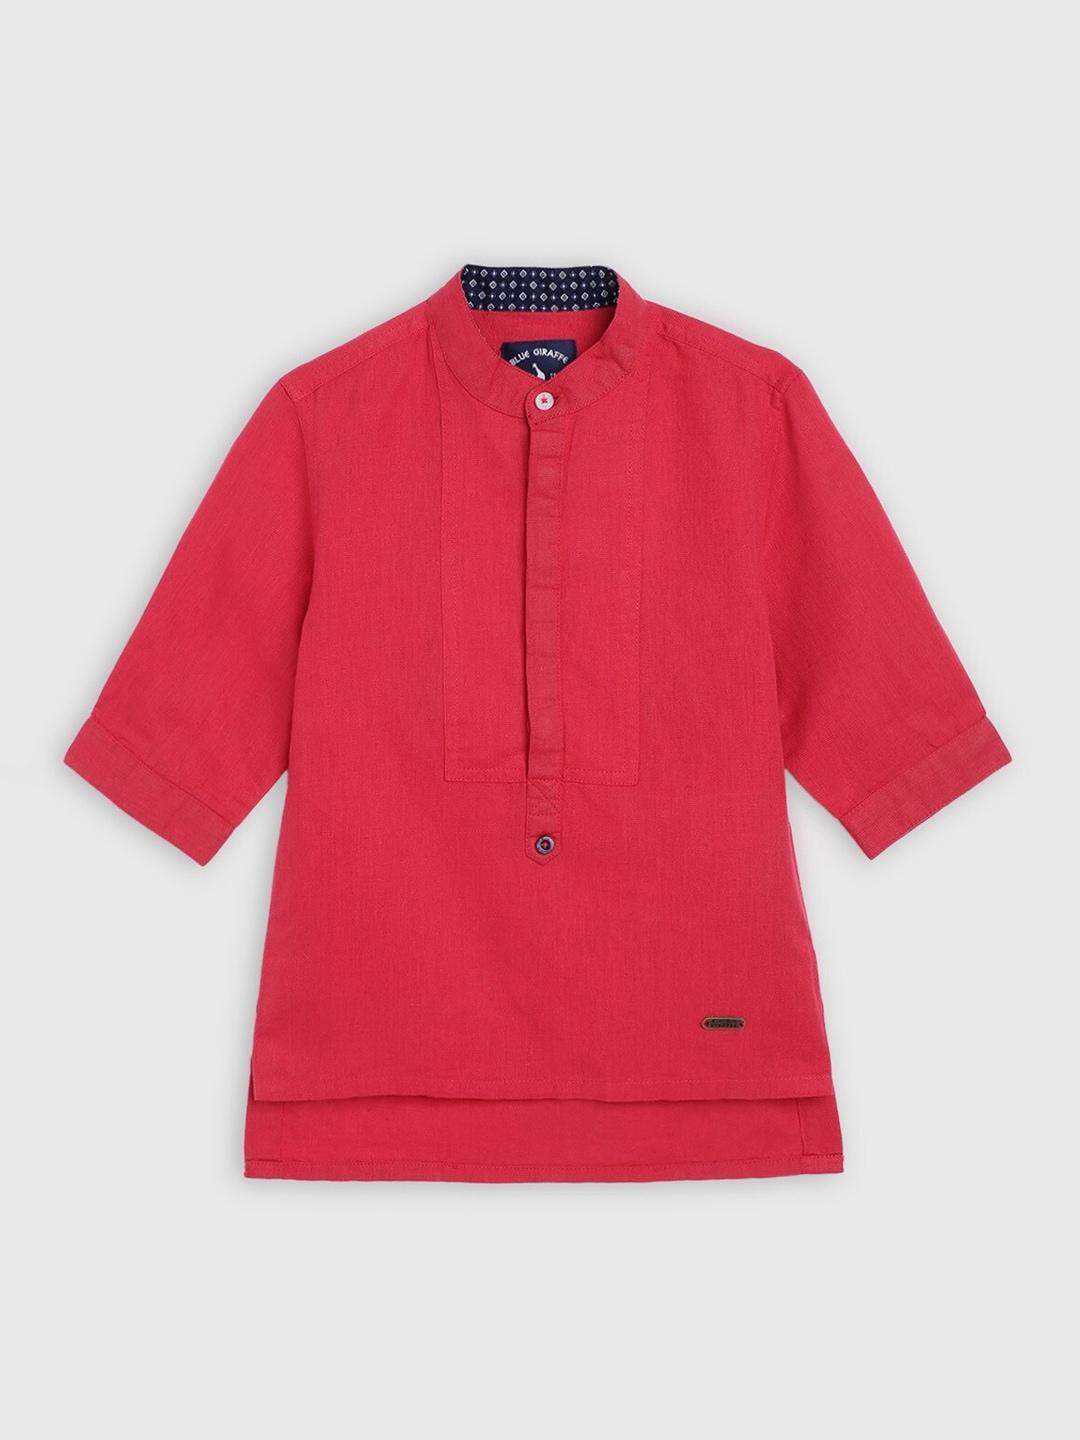 blue-giraffe-boys-red-regular-fit-solid-cotton-casual-shirt